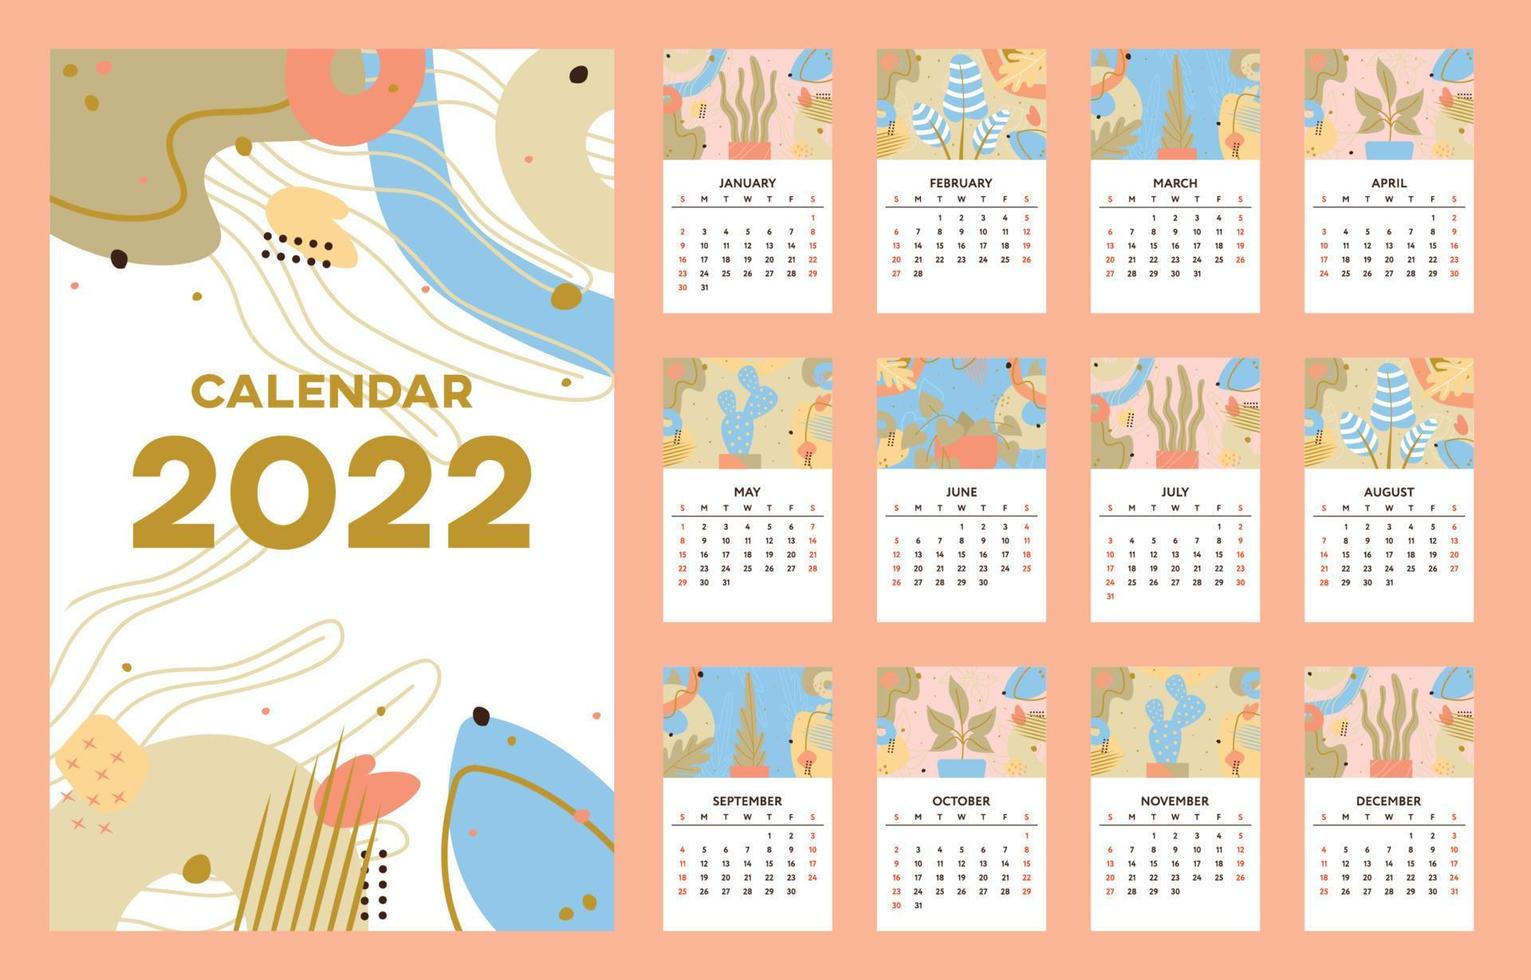 2022 Calendar Template in Botanical Theme vector